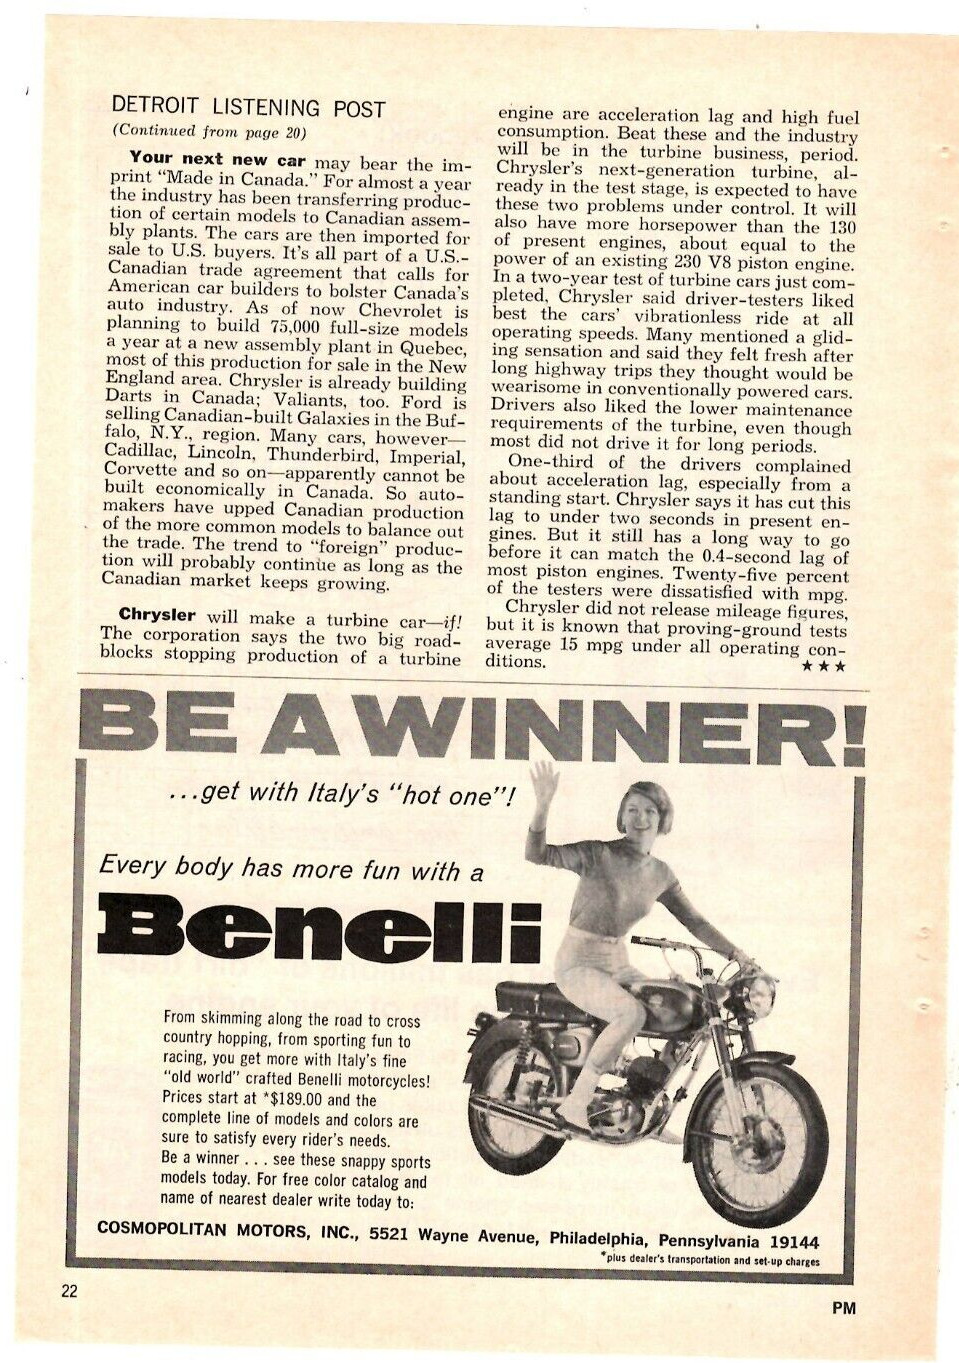 1966 Print Ad Cosmopolitan Motors Inc Benelli Motorcycles Be a Winner Italy\'s